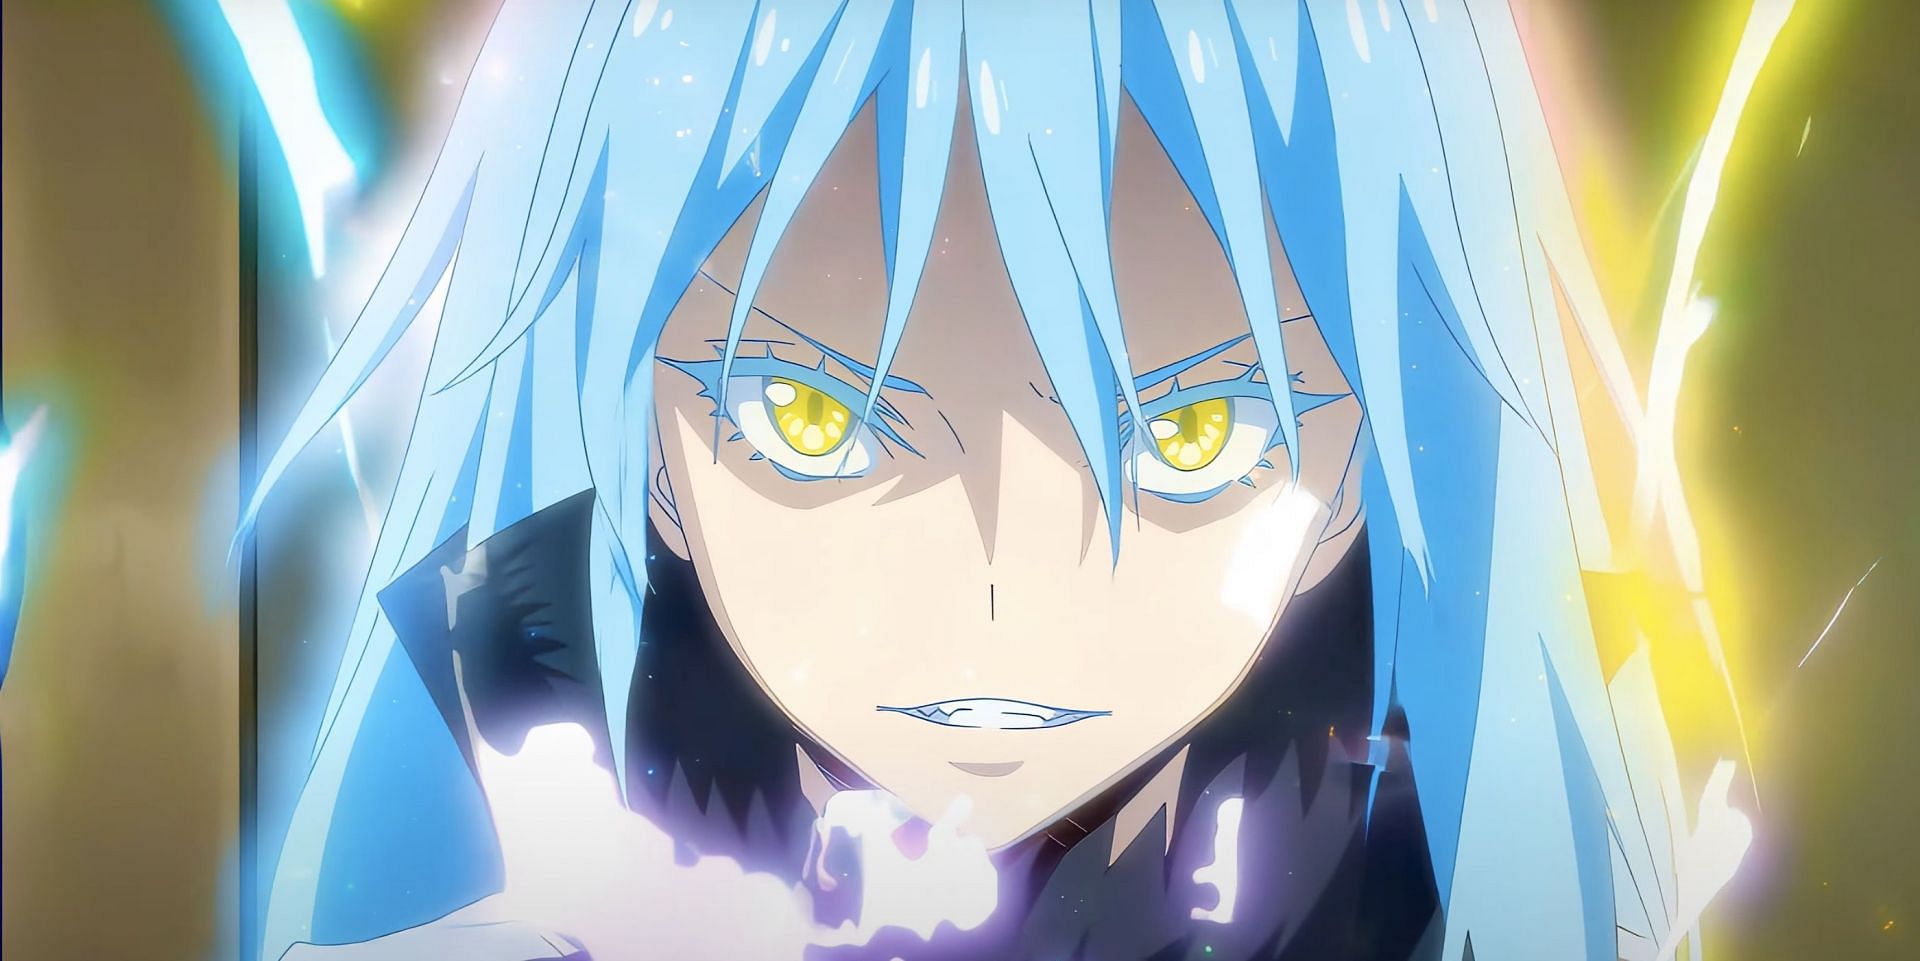 Rimuru Tempest as seen in anime (Image via 8bit)